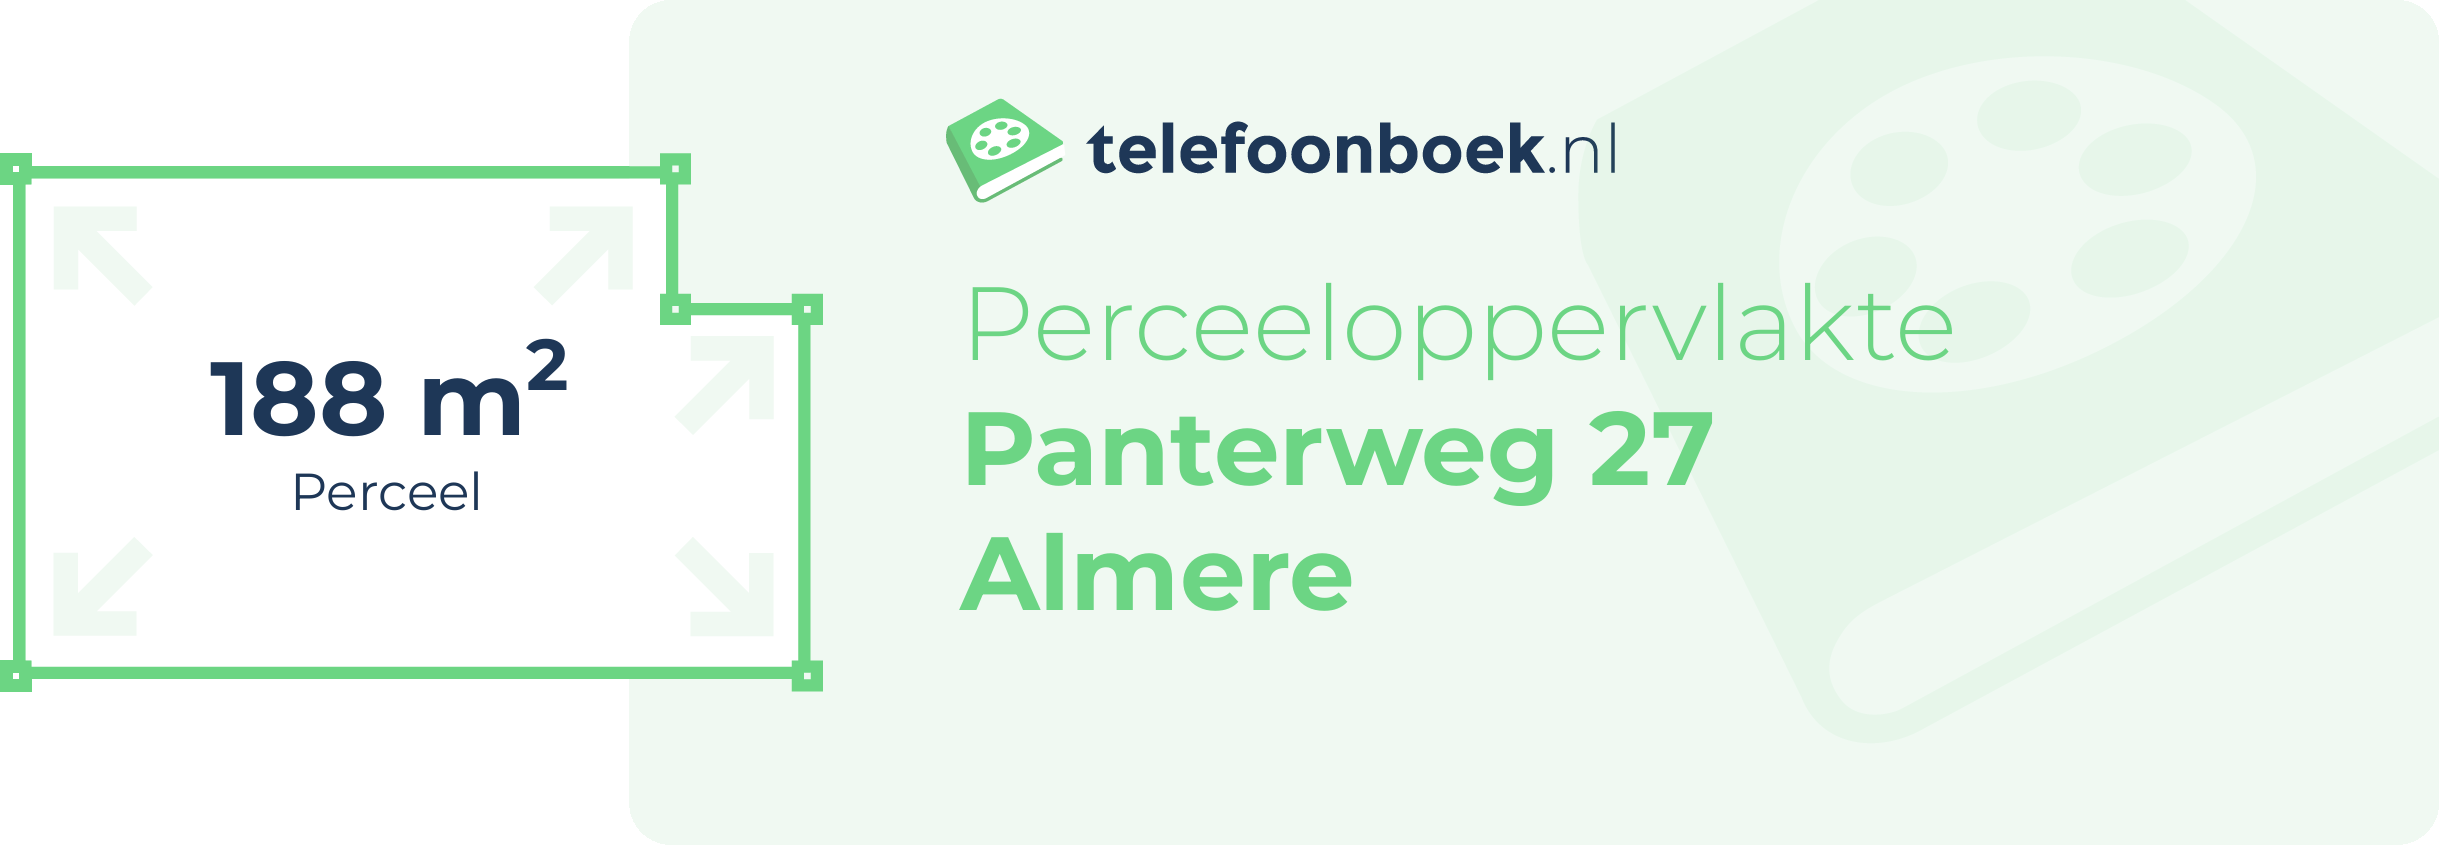 Perceeloppervlakte Panterweg 27 Almere